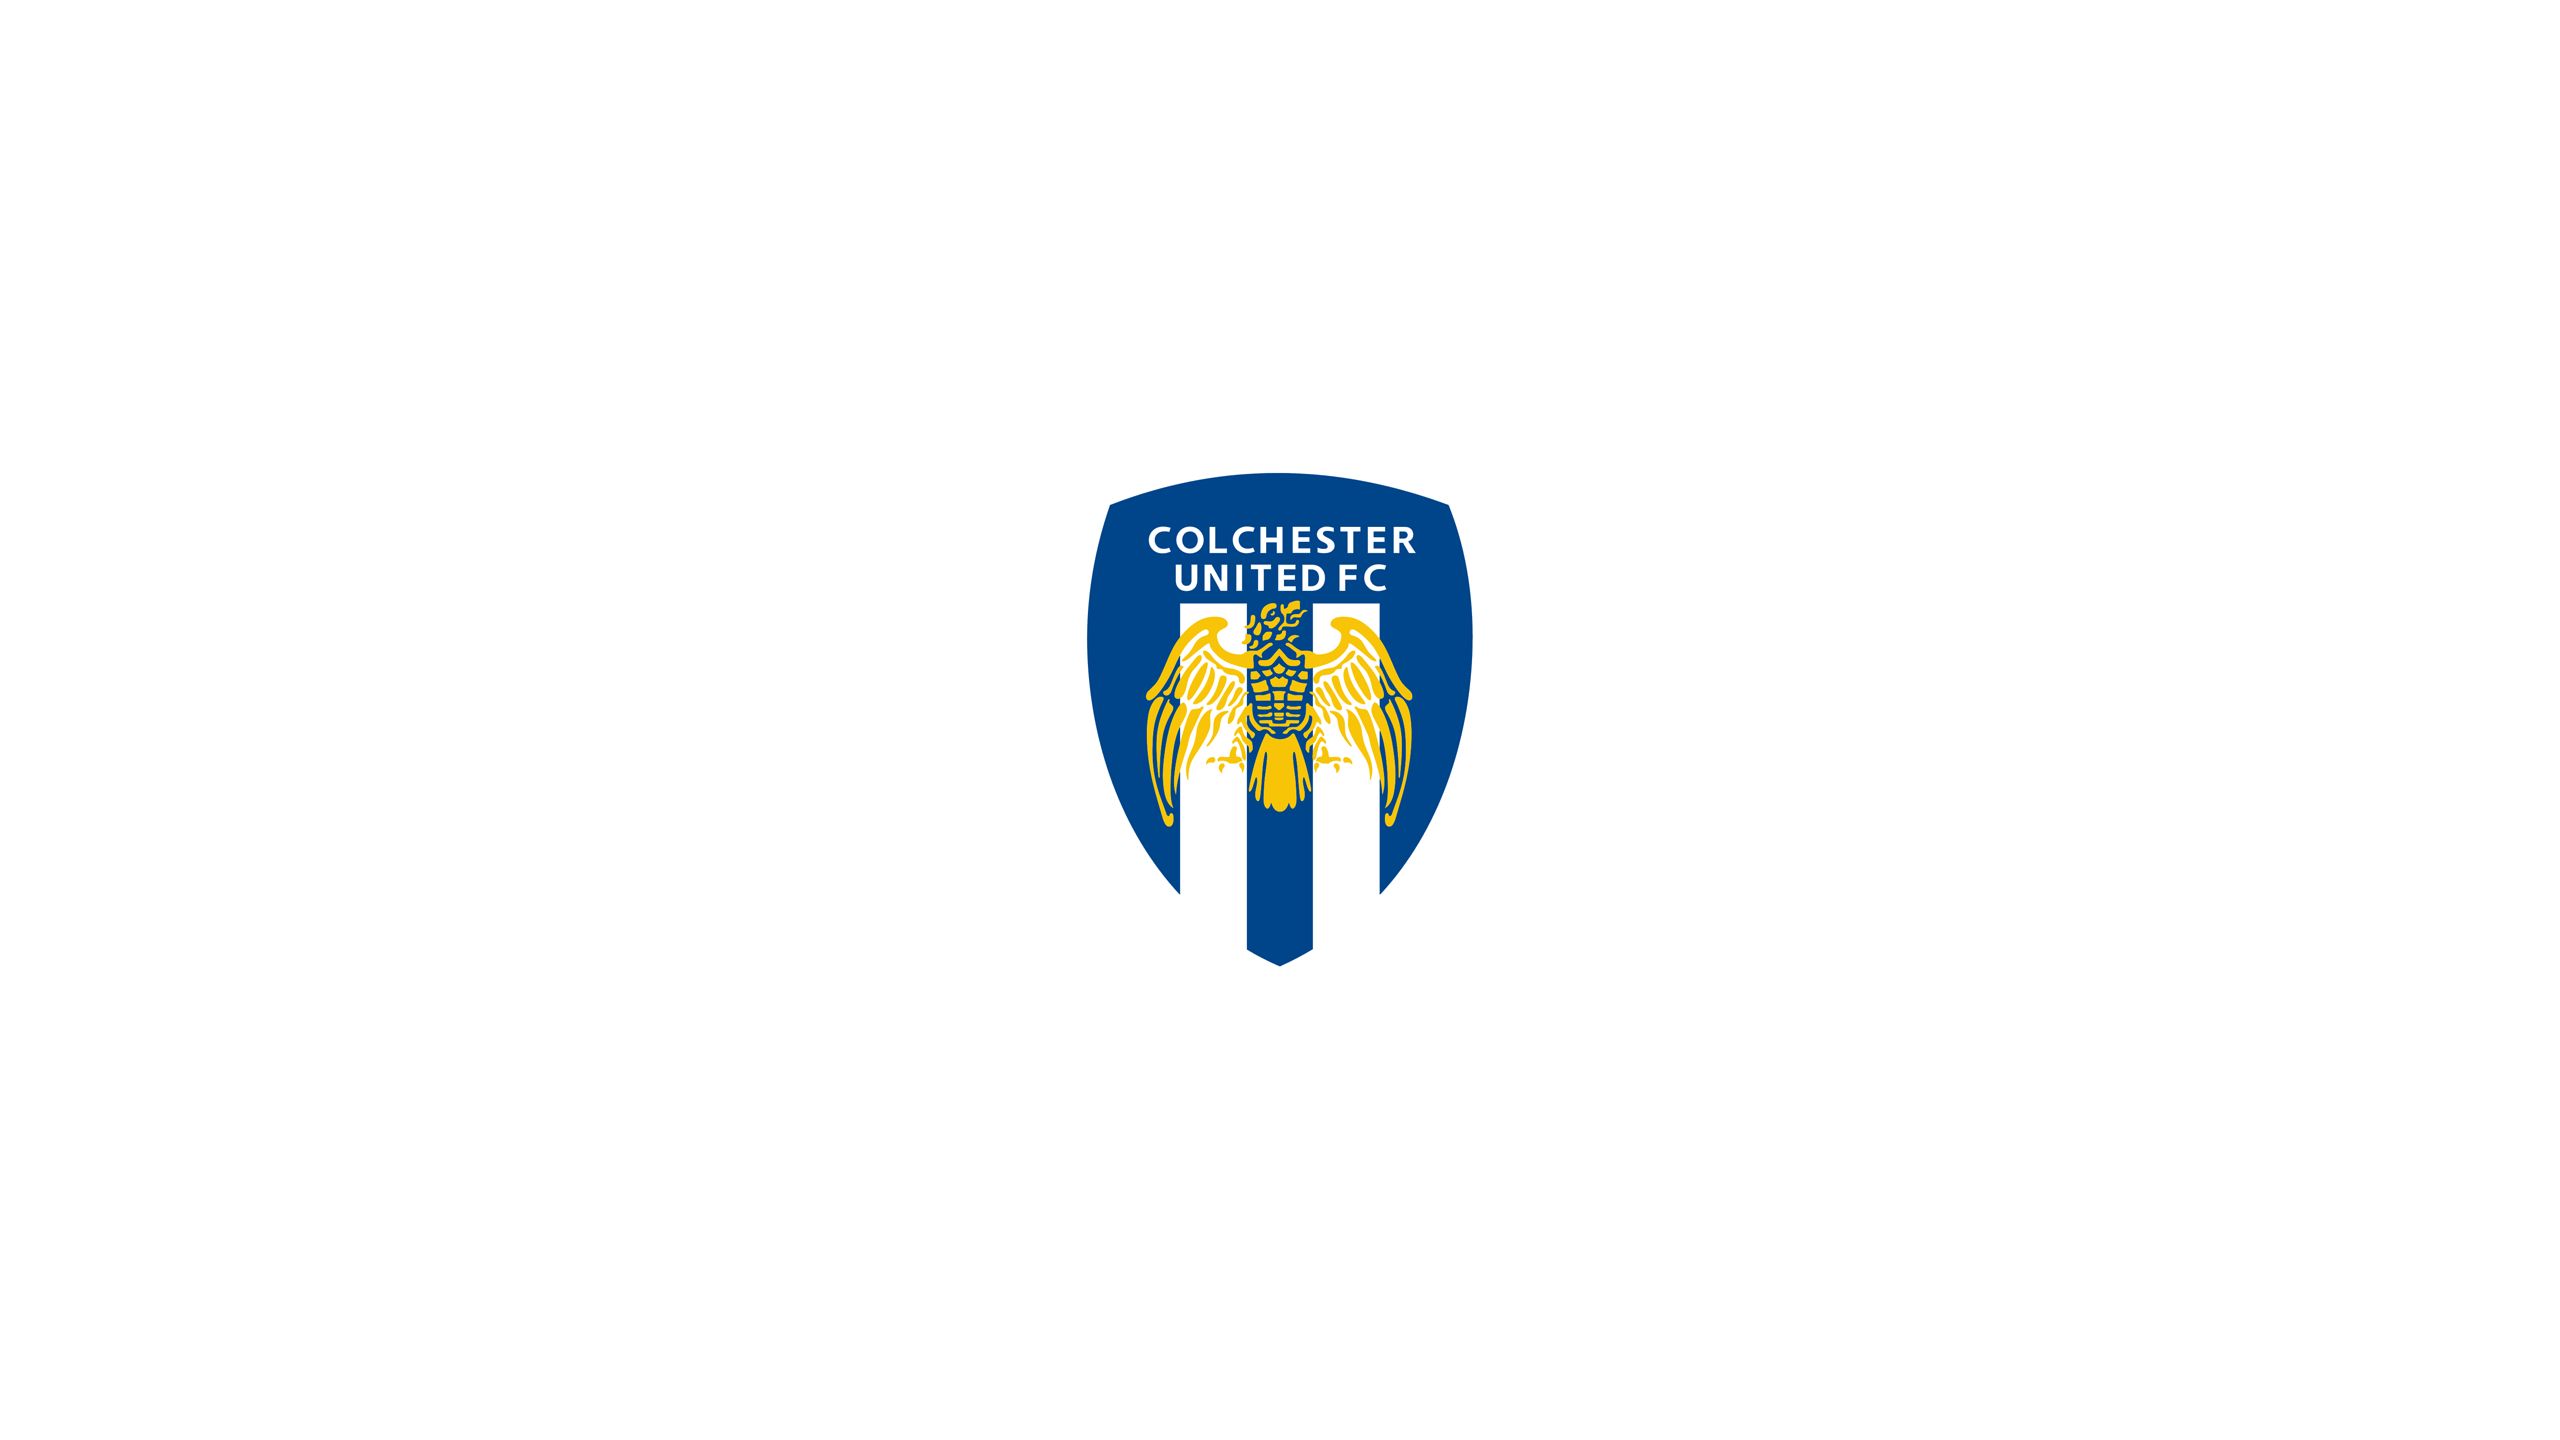 Descarga gratuita de fondo de pantalla para móvil de Fútbol, Logo, Emblema, Deporte, Colchester United Fc.